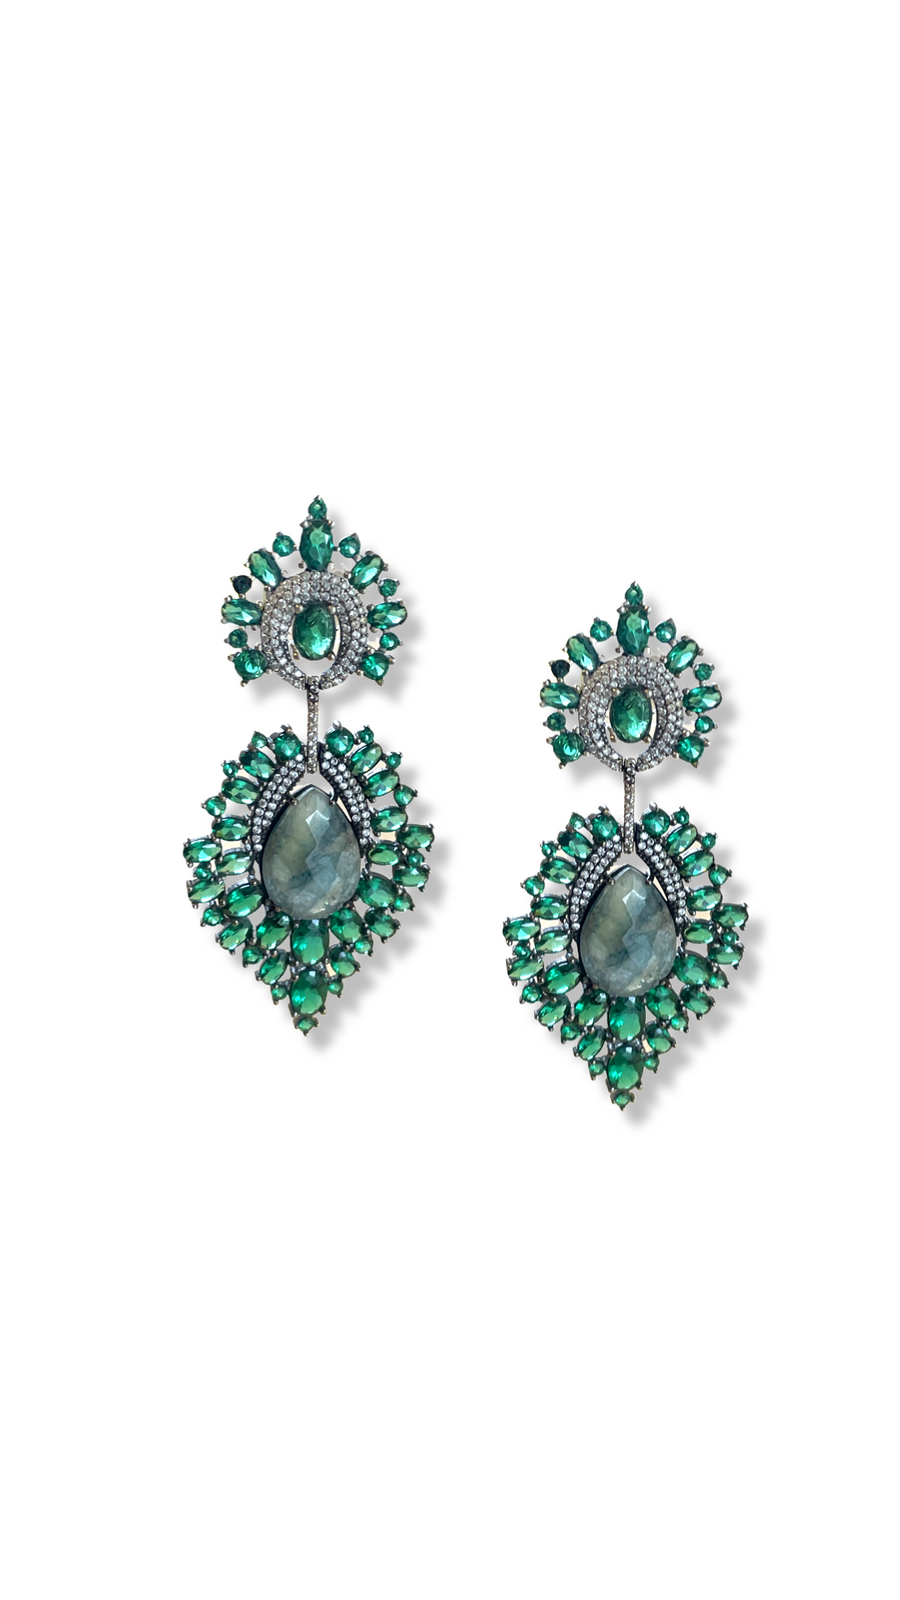 Victoria emerald green earrings